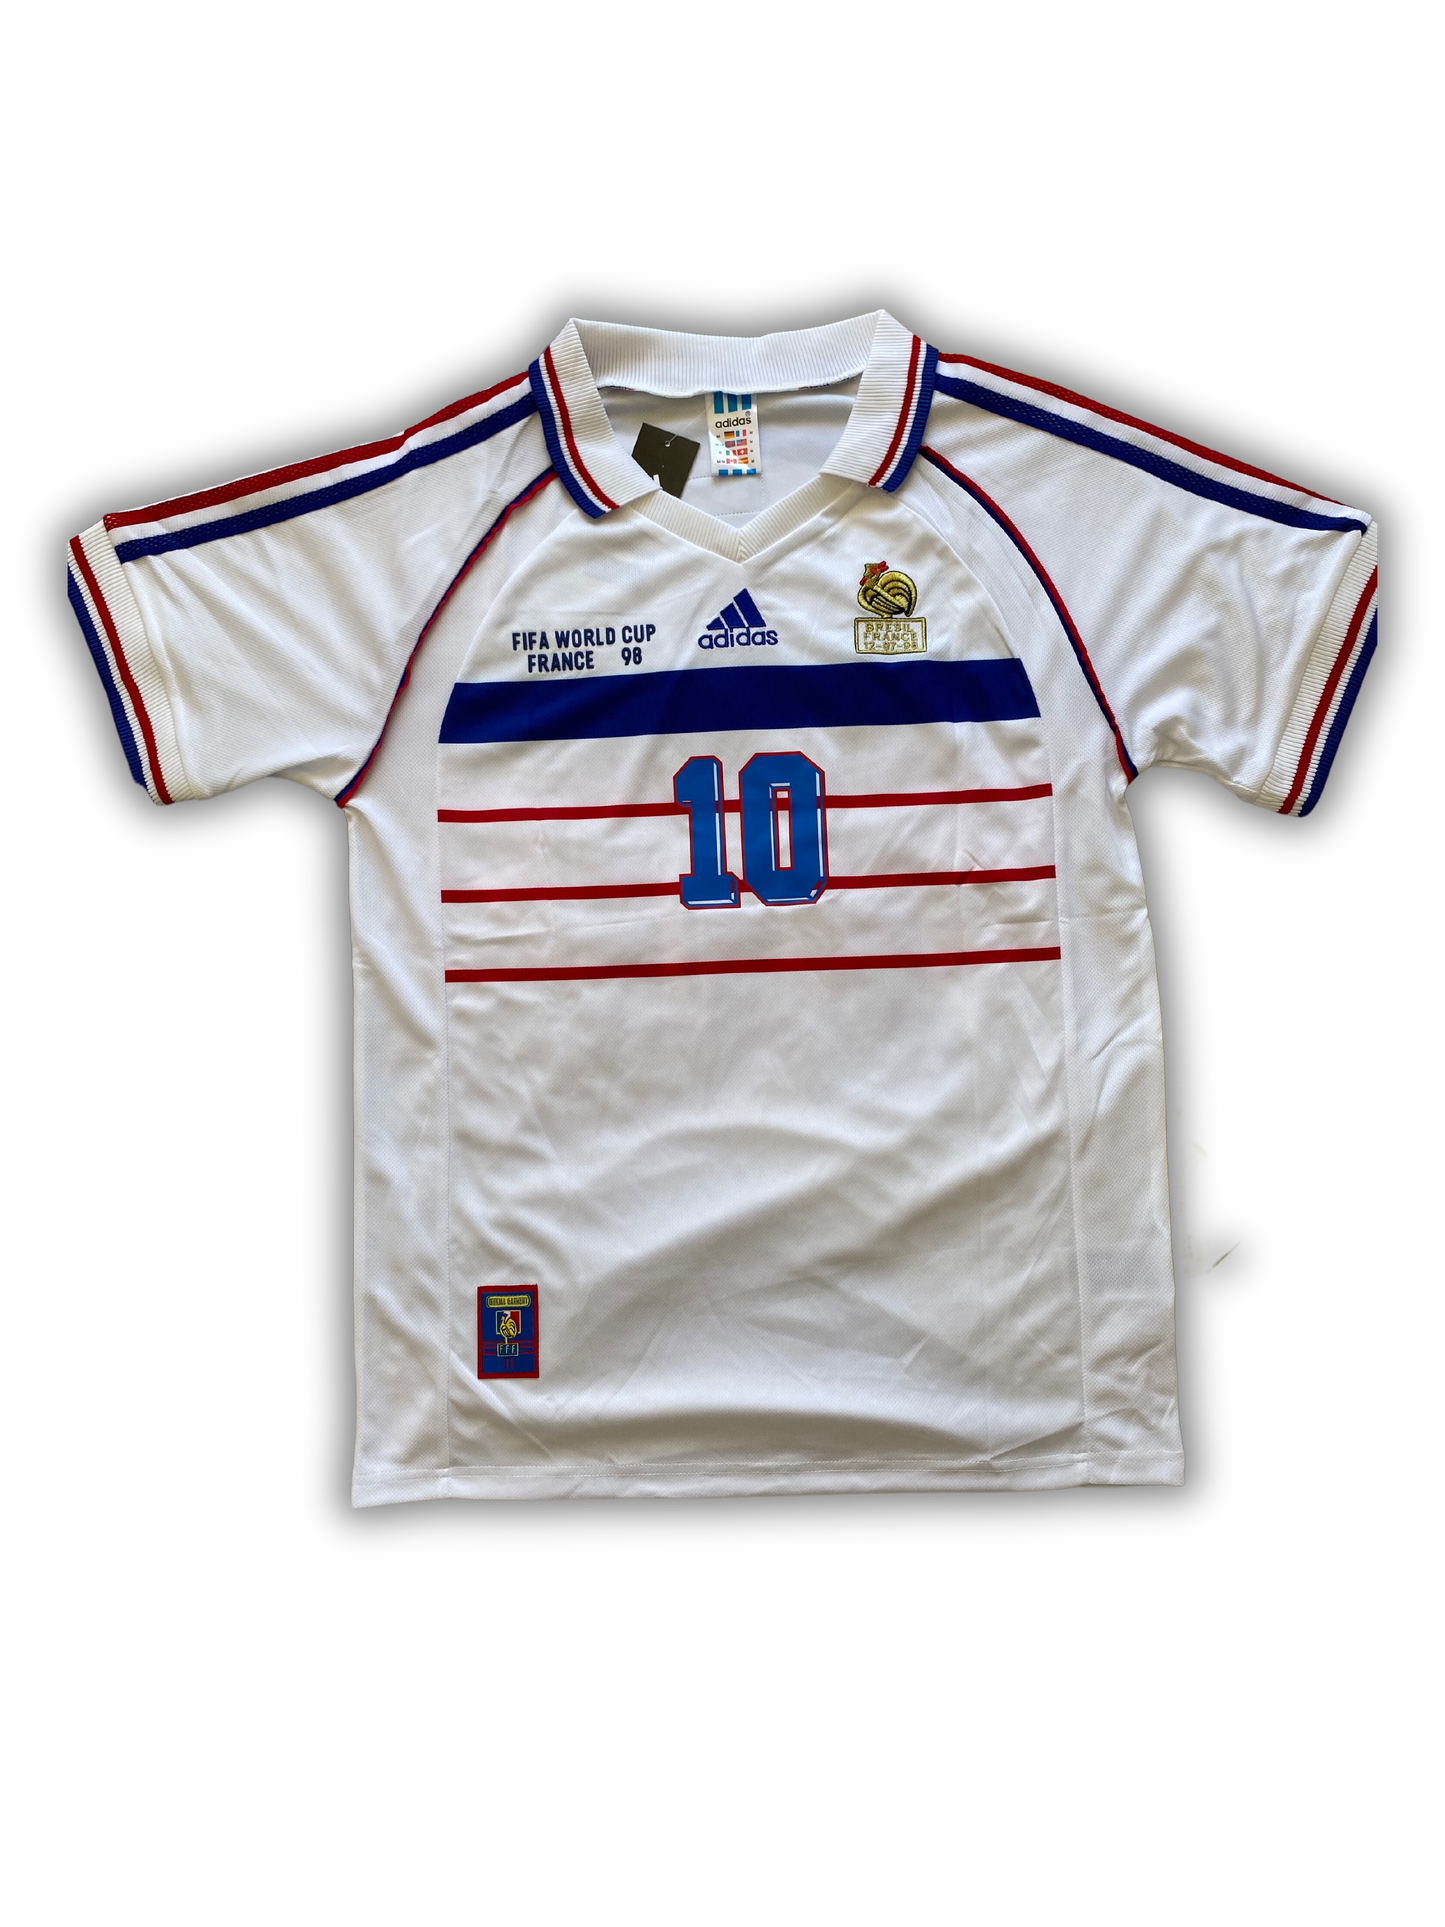 Vintage 1998 France team Zidane jersey